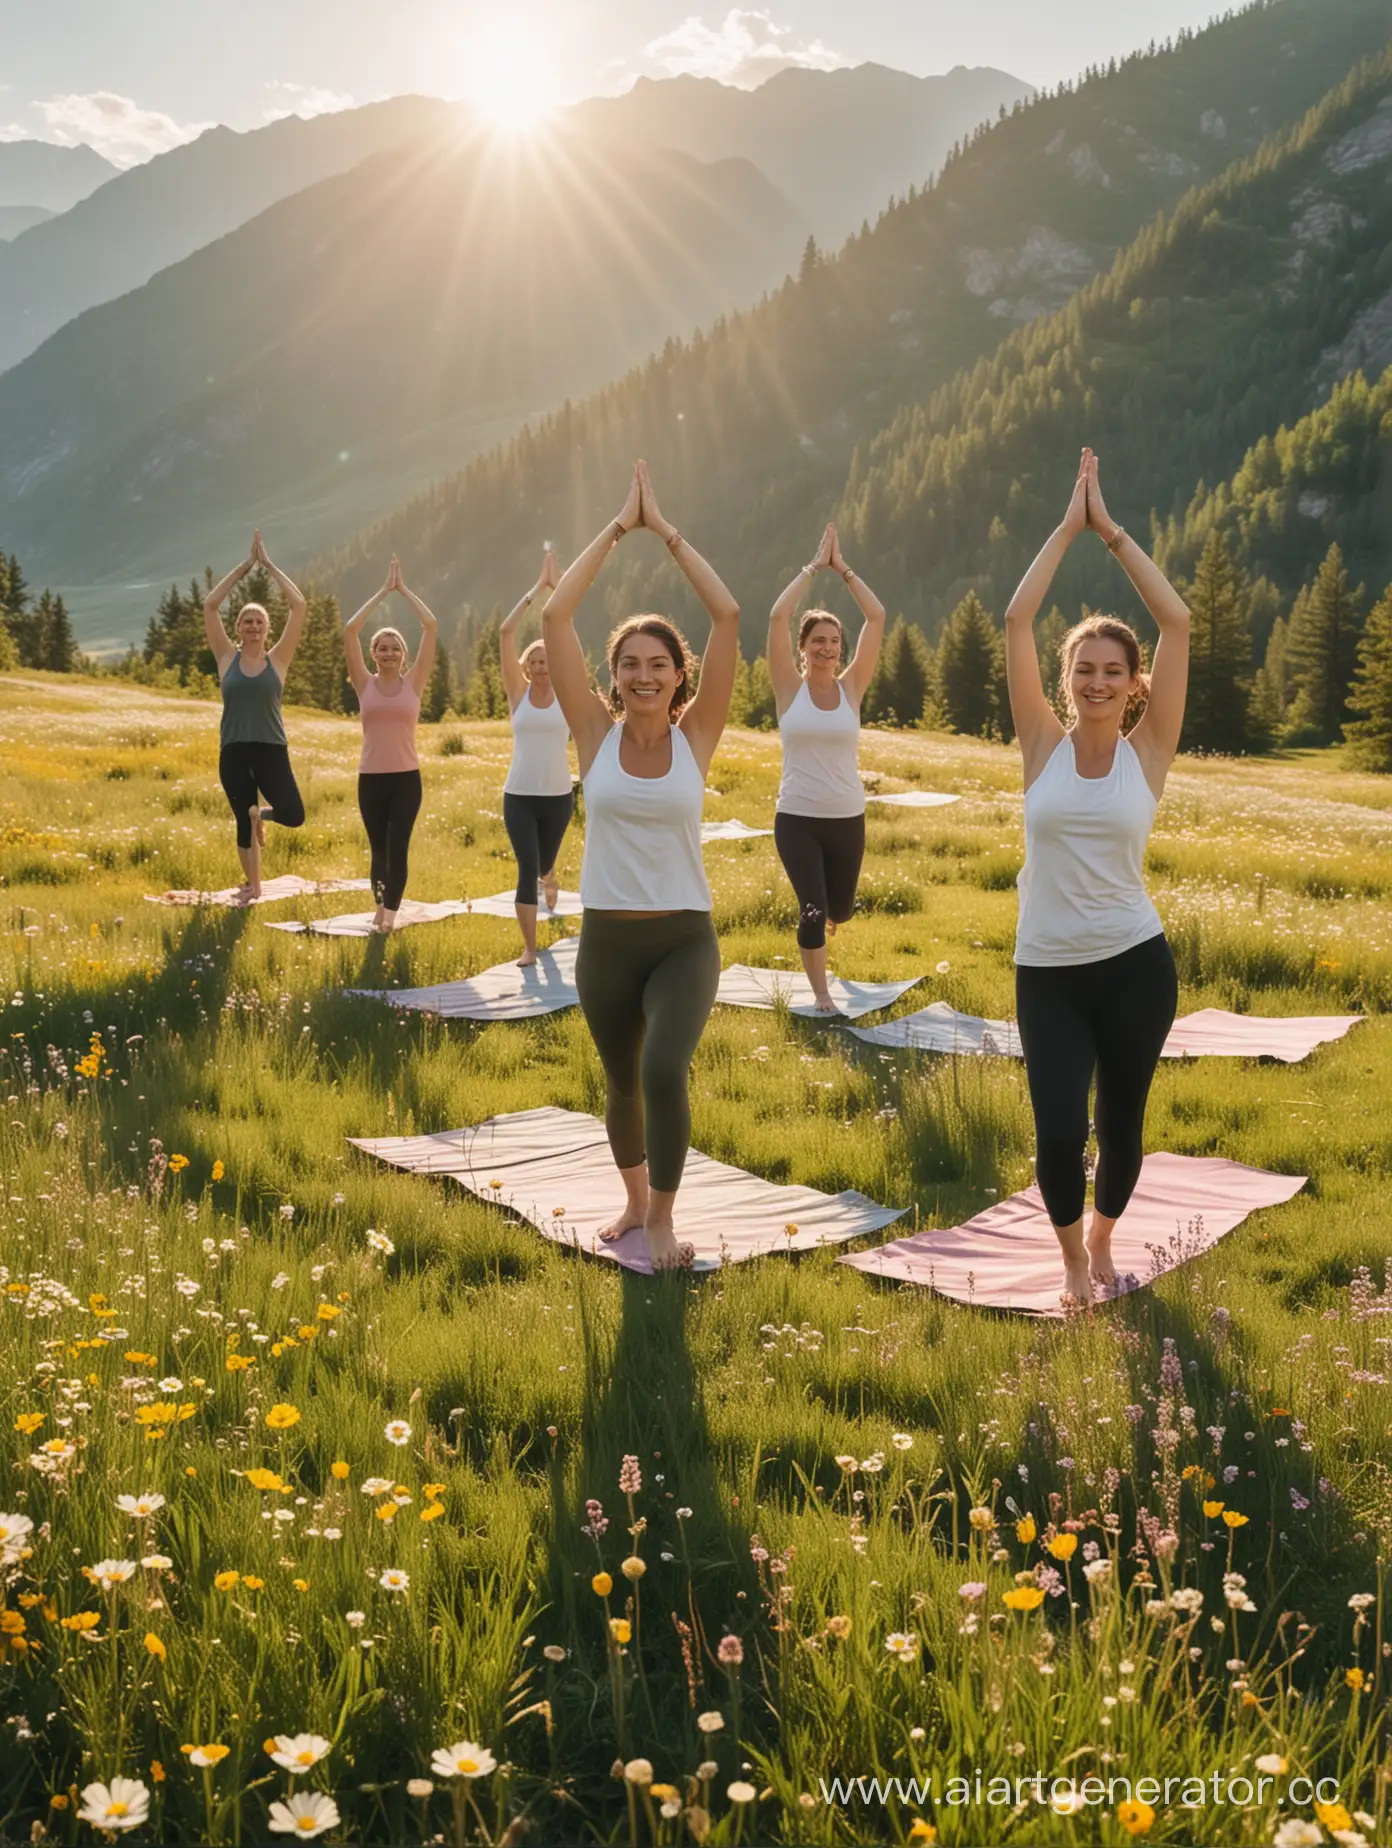 Joyful-Yoga-Practice-in-Meadow-with-Flowers-and-Mountain-Horizon